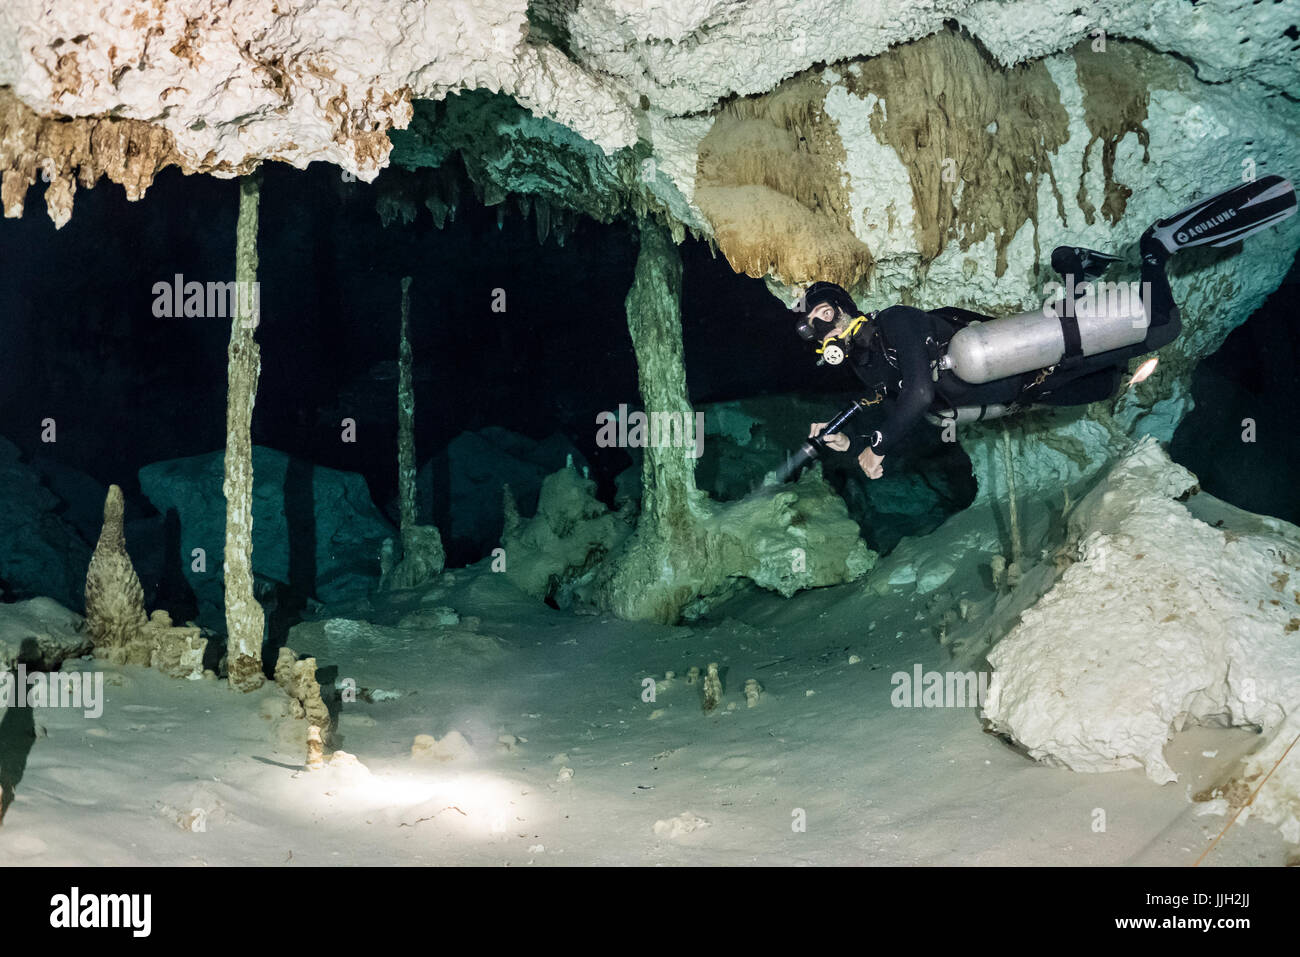 A scuba diver explores the cave passages of Mexico's famed Dos Ojos cenote. Stock Photo